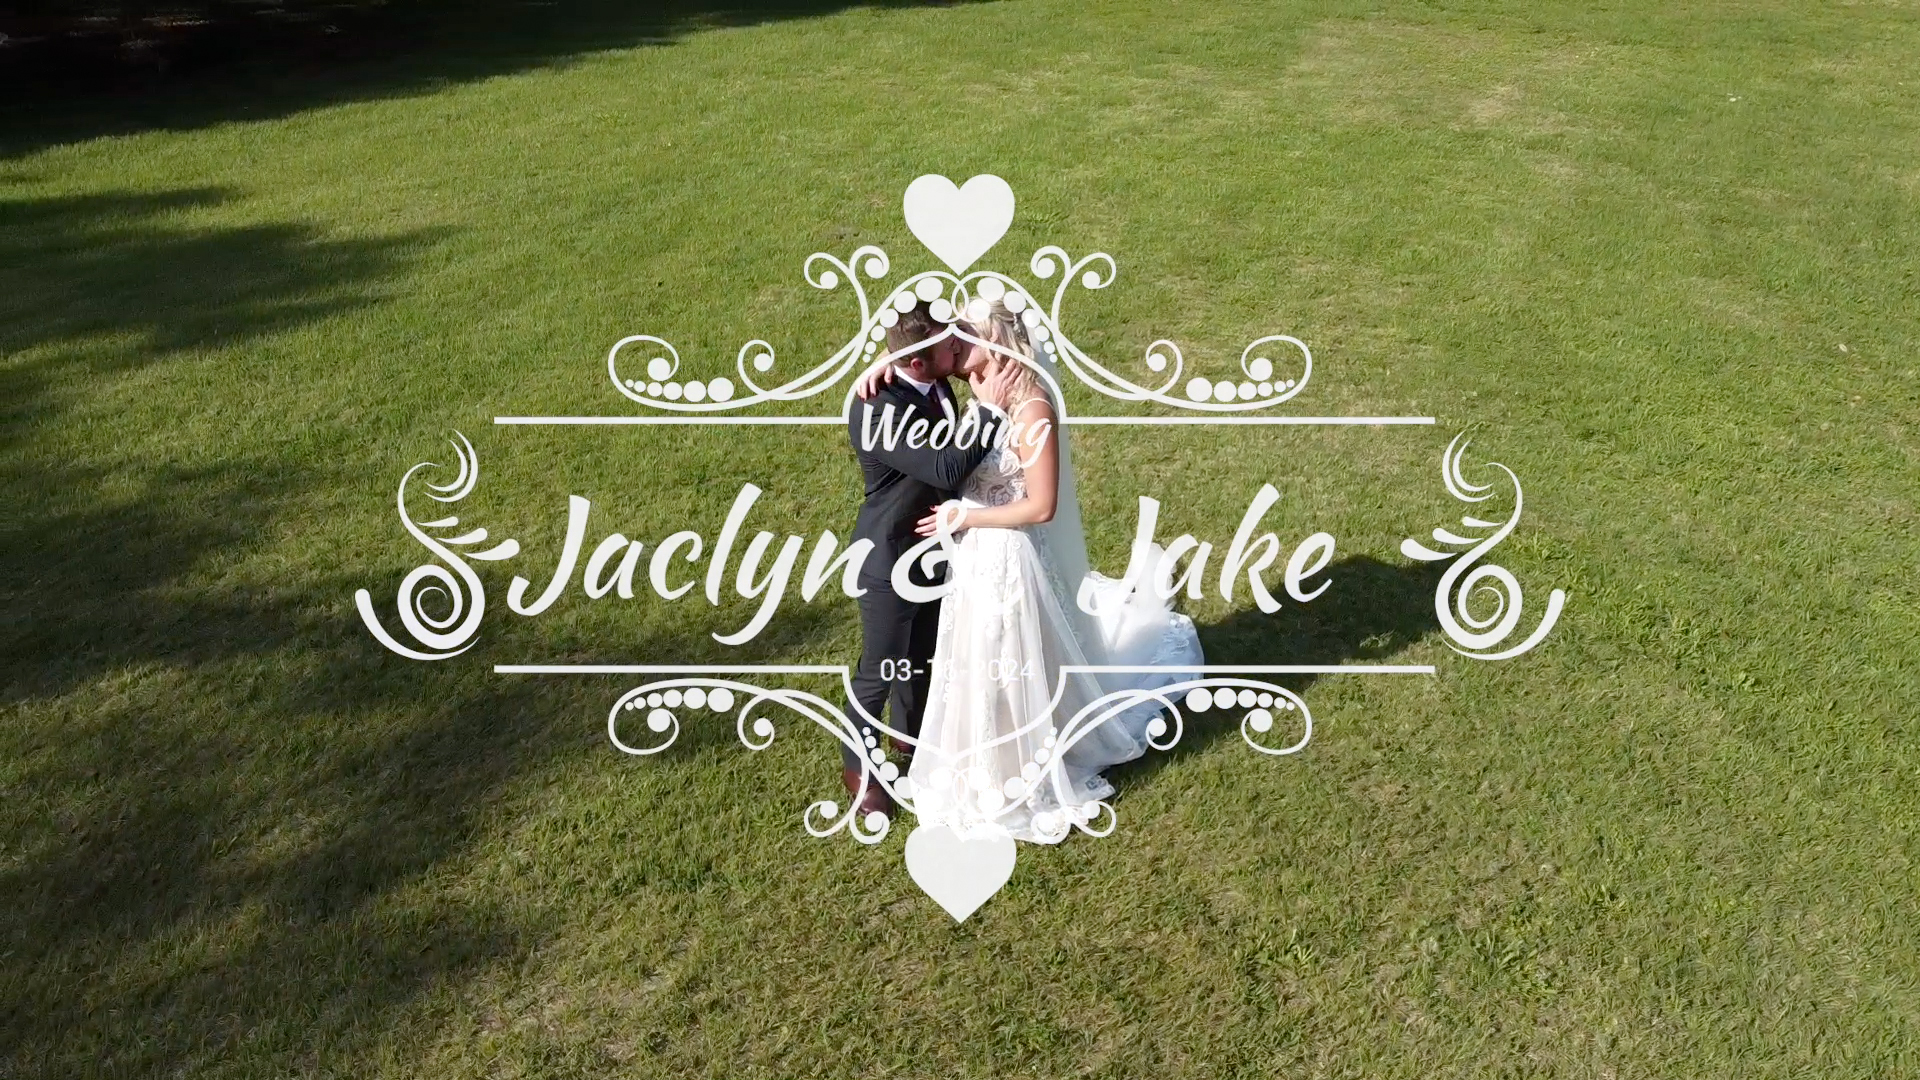 Jaclyn & Jake Wedding – Trailer